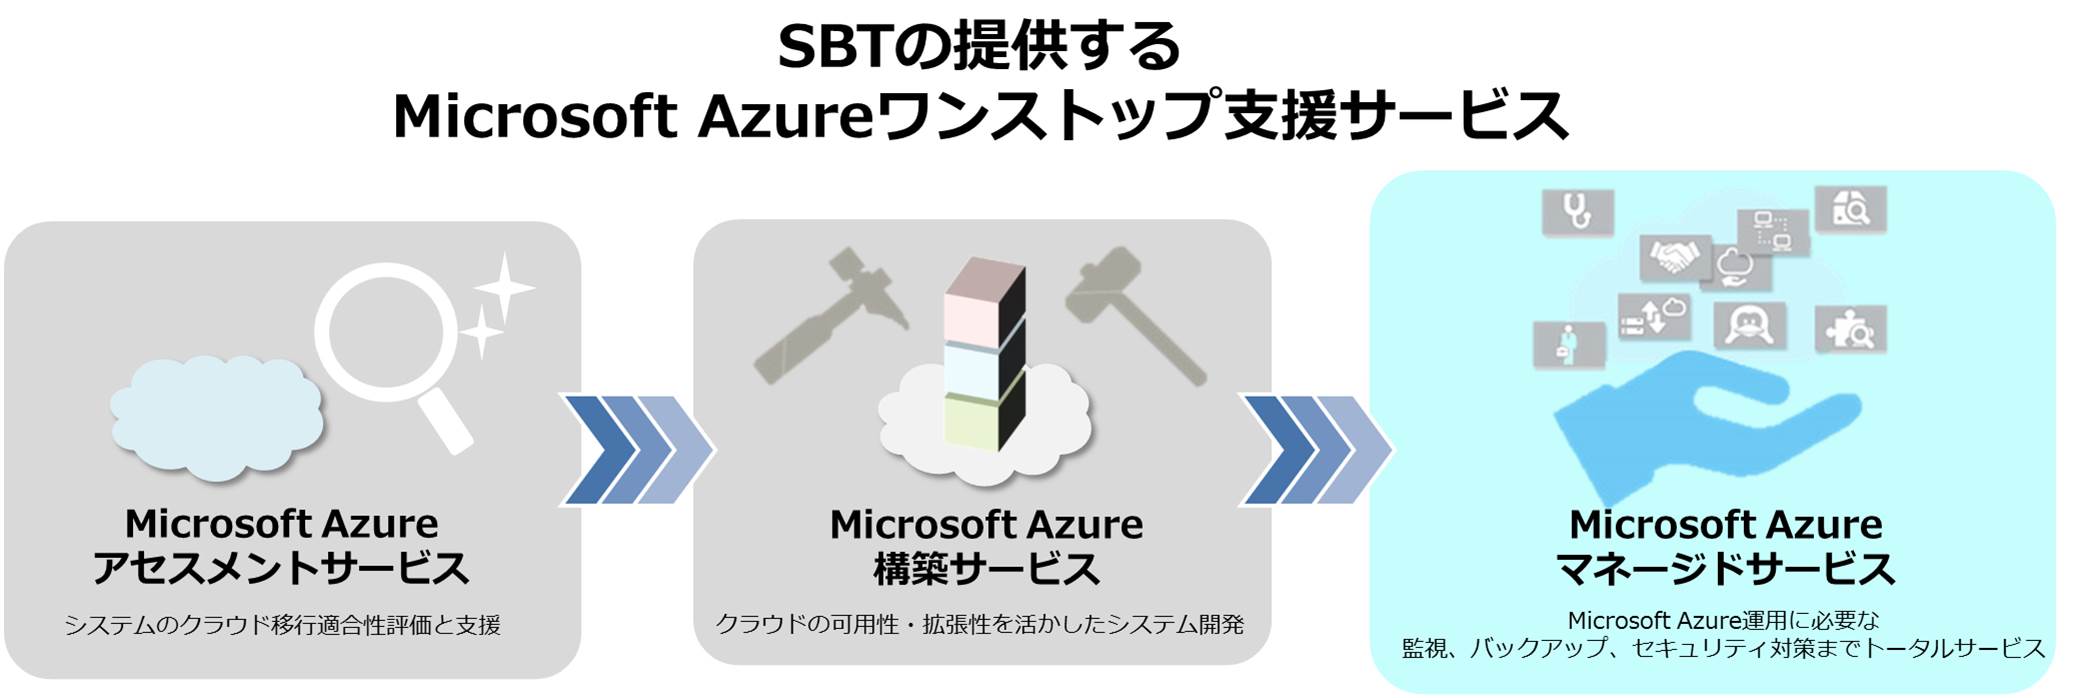 MicrosoftAzureワンストップ支援サービス